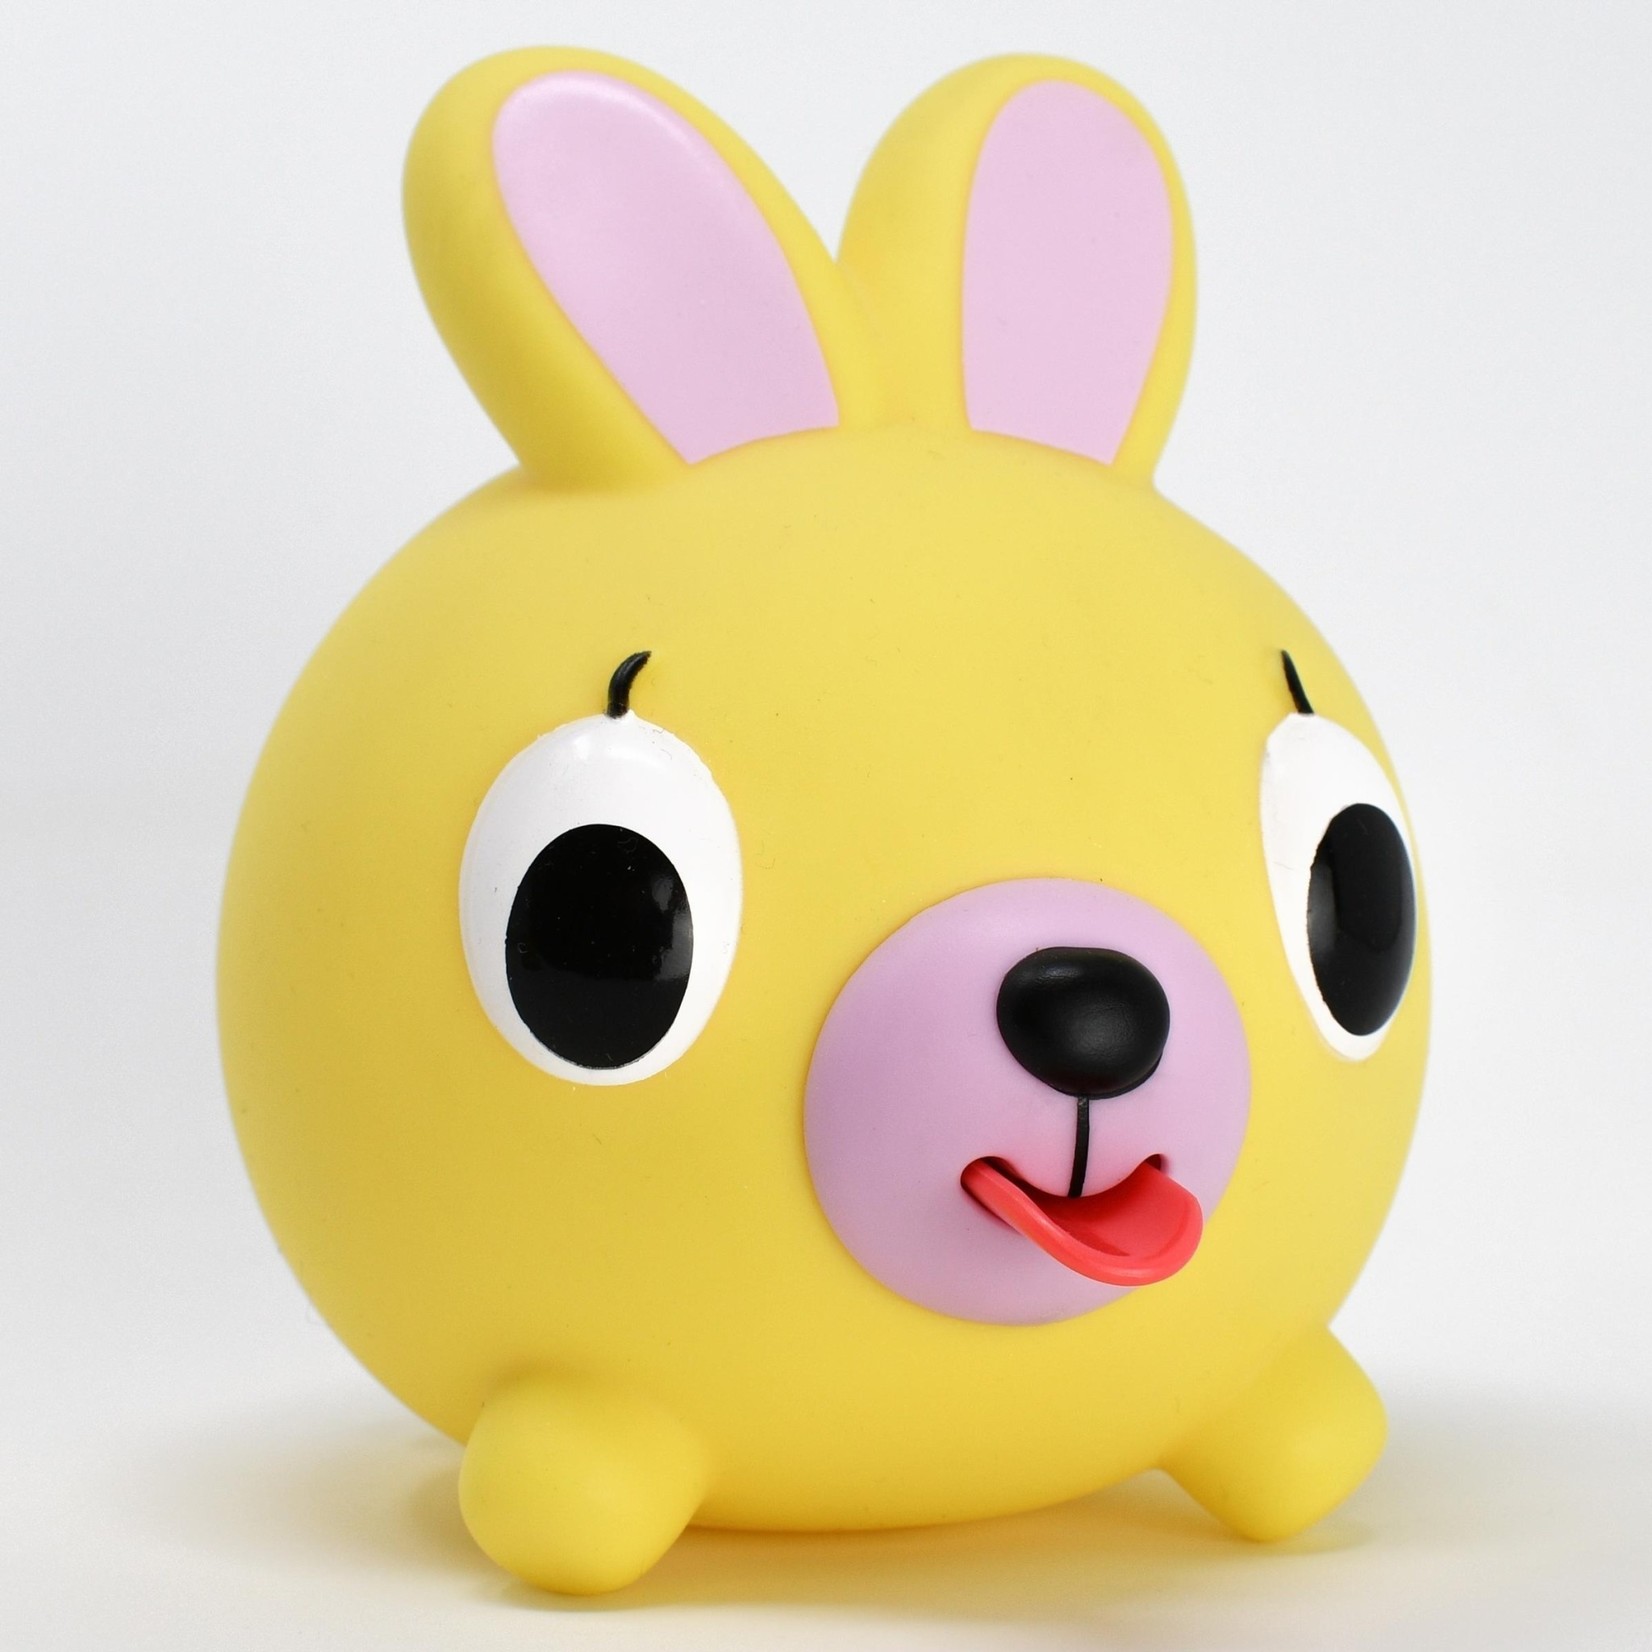 Sankyo Toys/JabberBall Jabber Ball Yellow Bunny